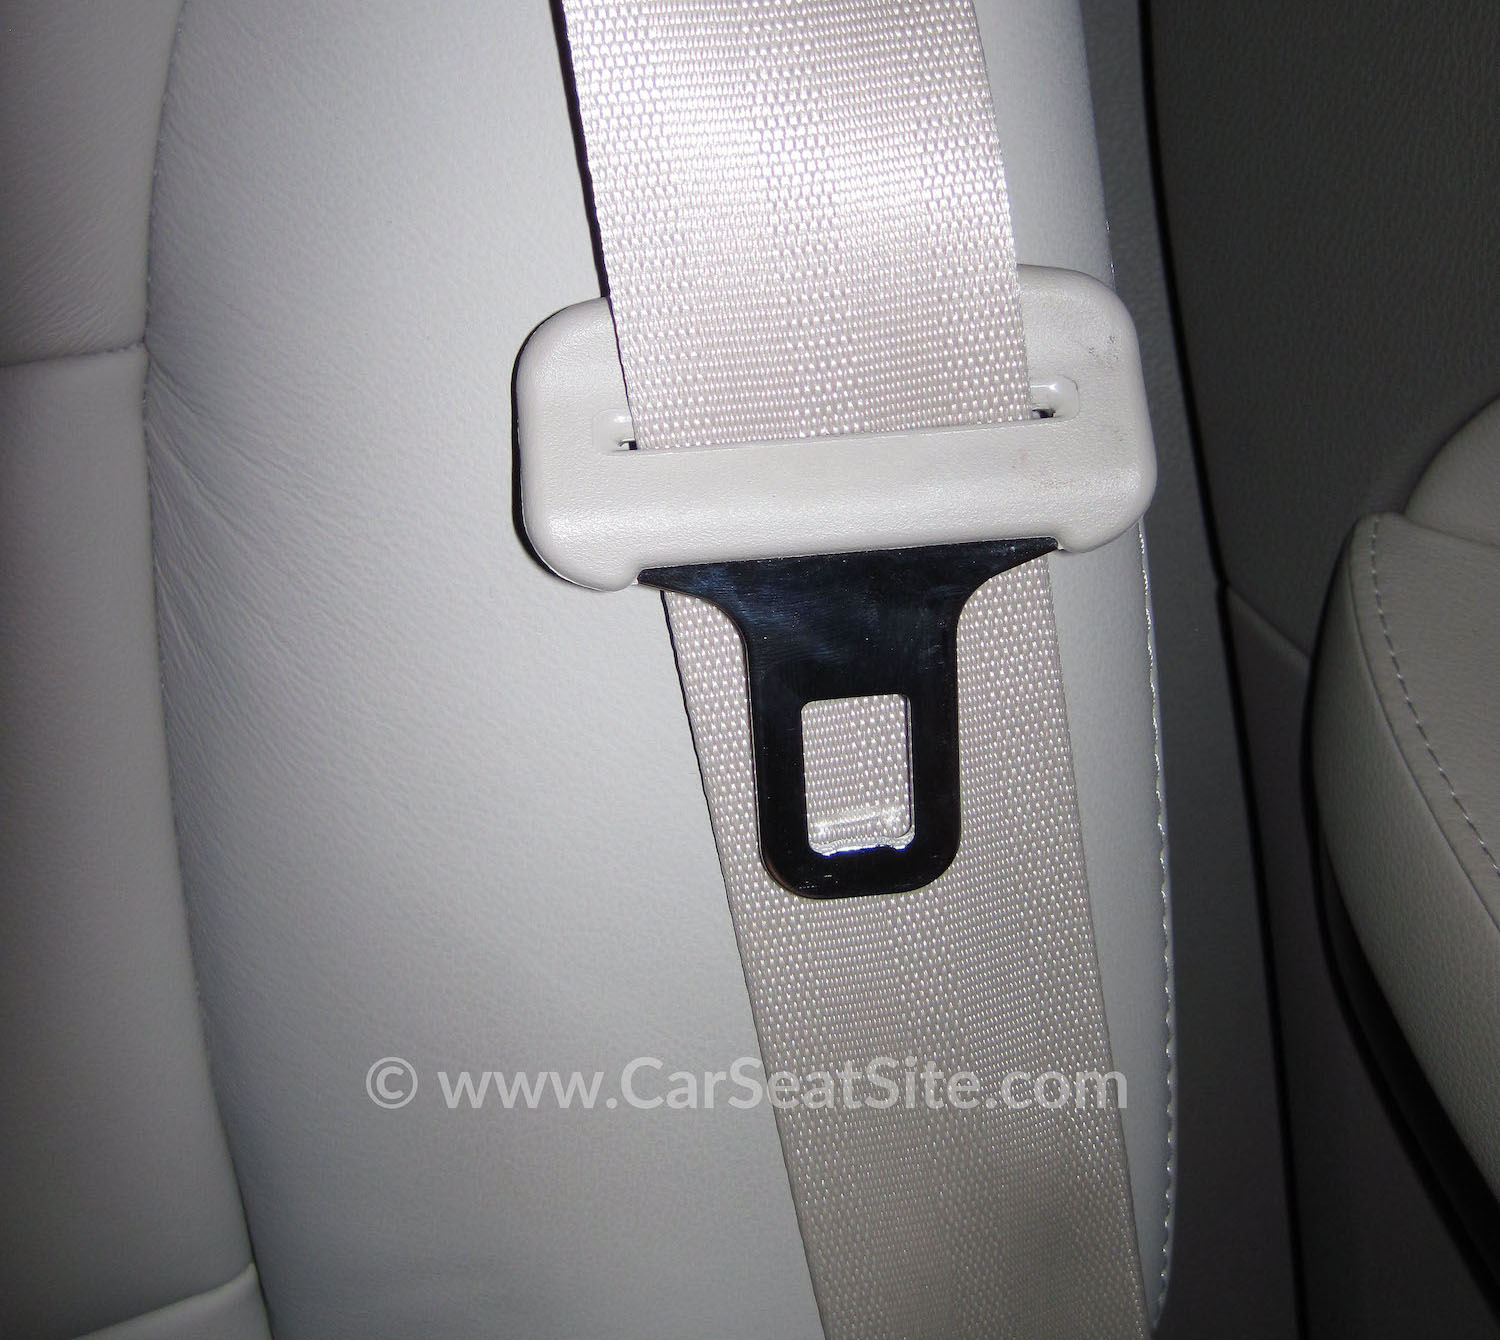 seat belt slide stop button